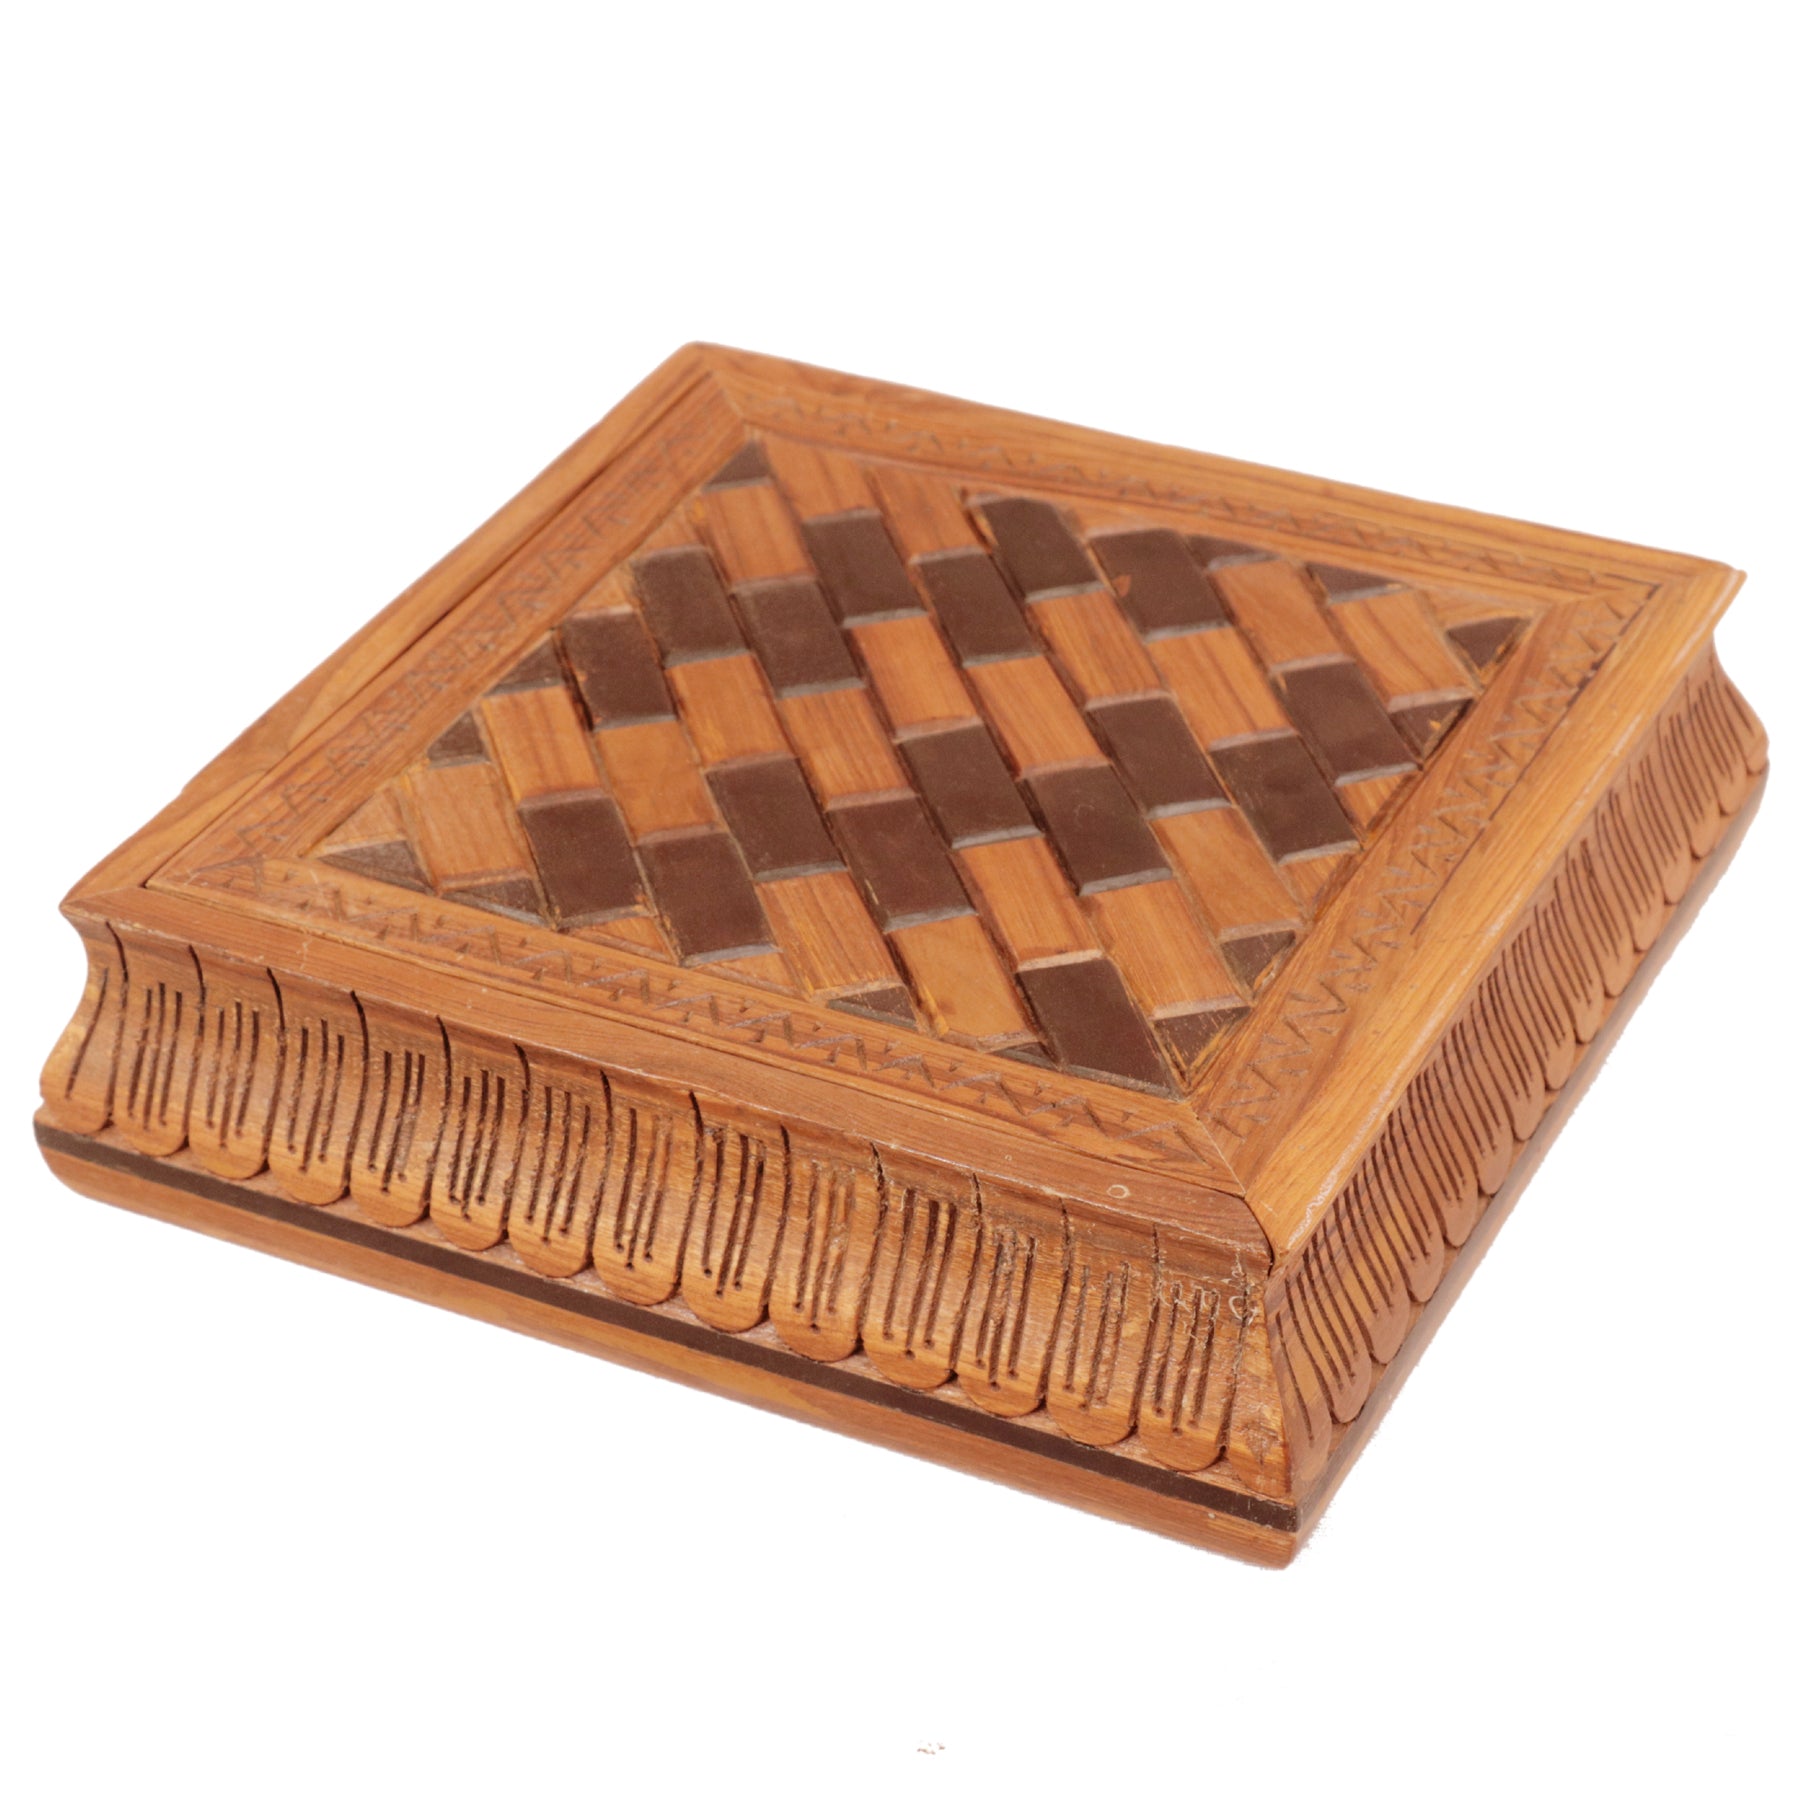 Checkered Tile Box Wooden Box